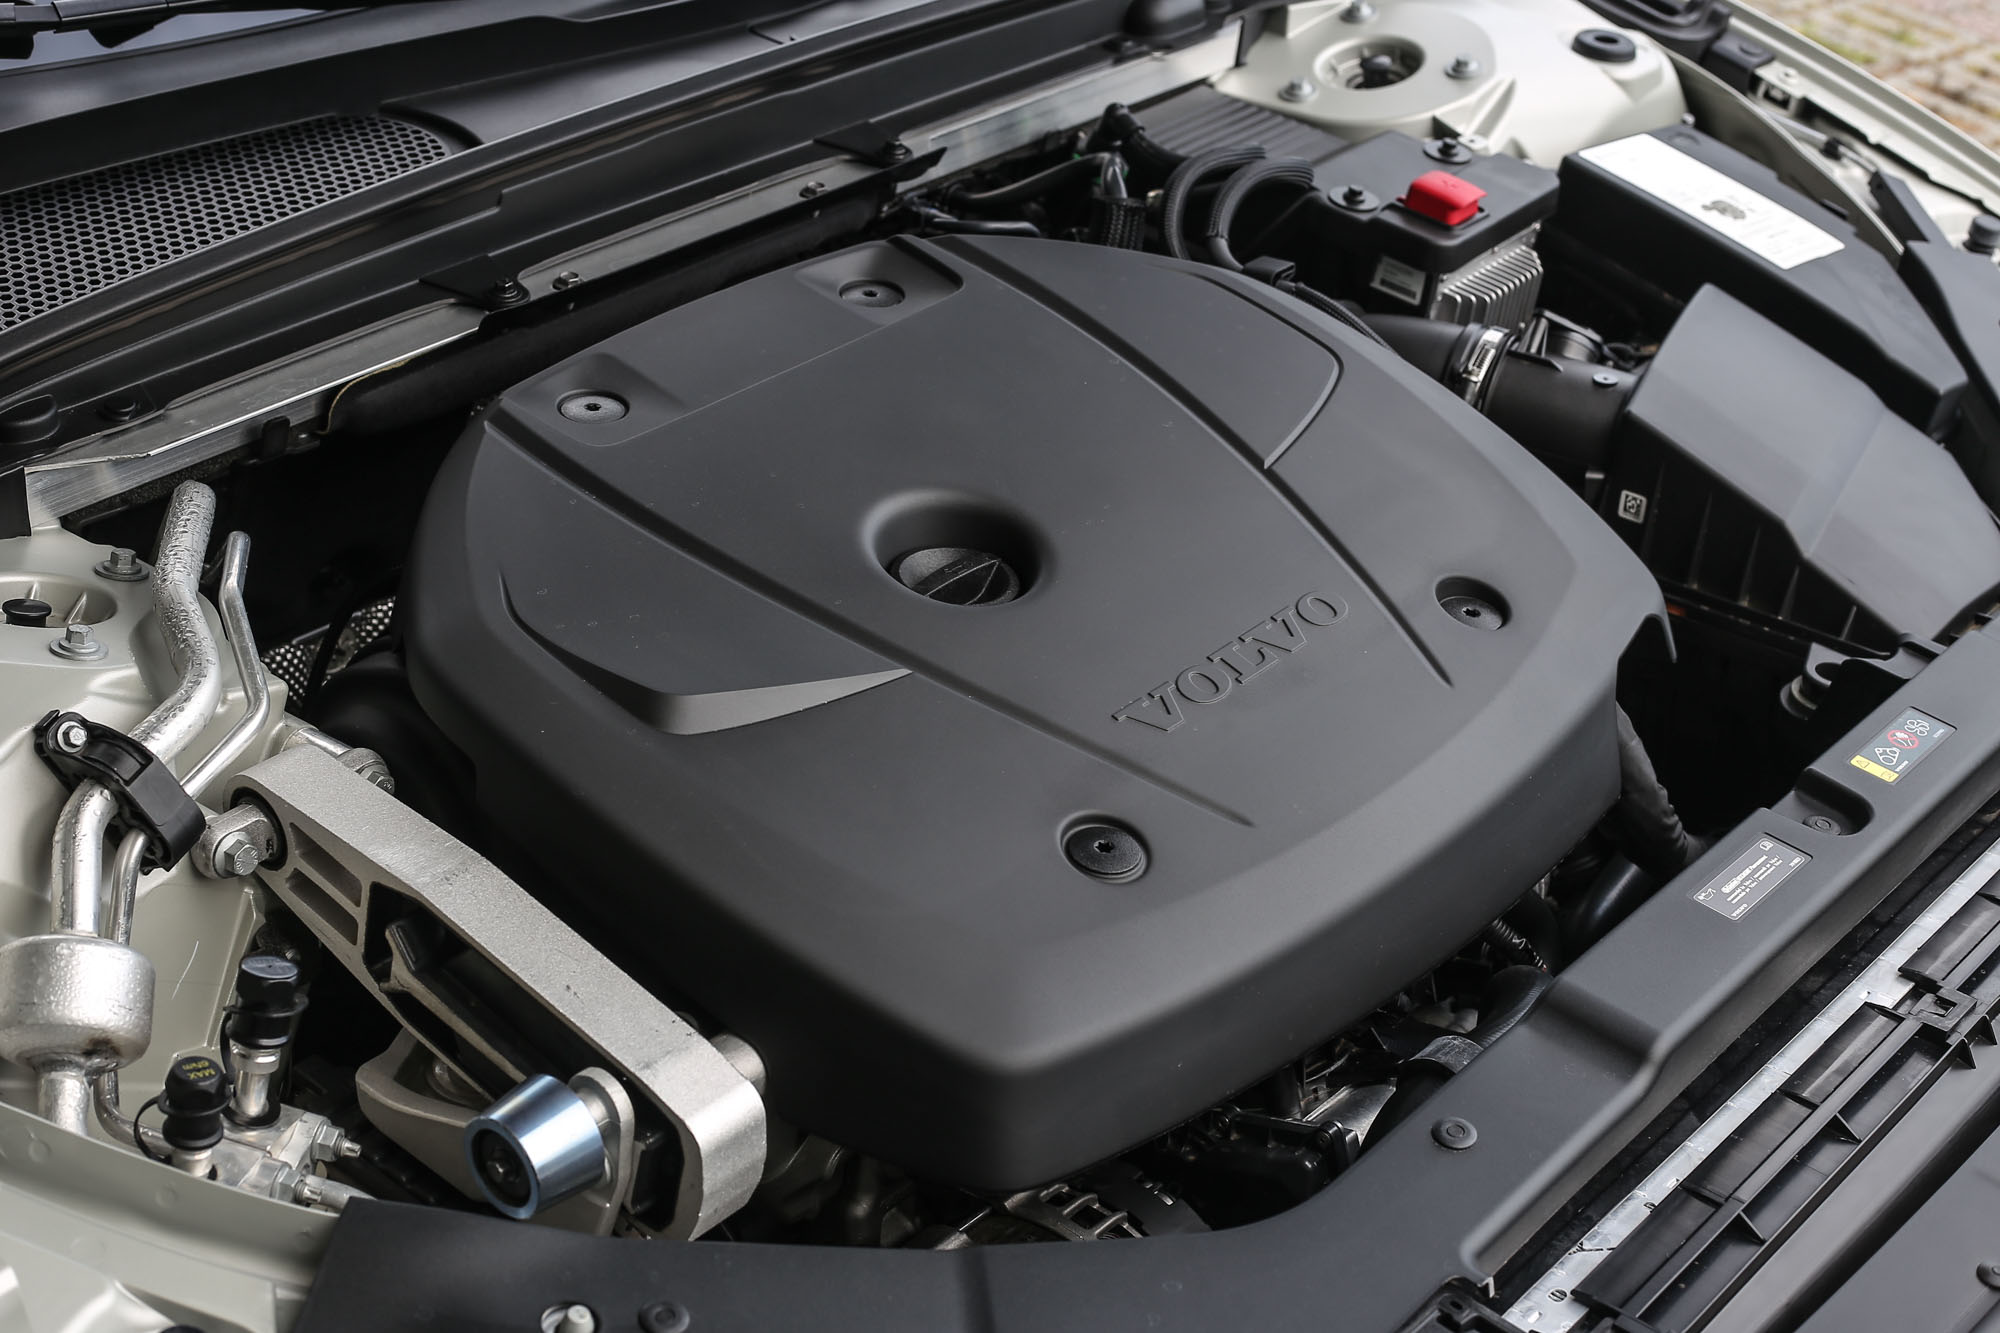 V60 T4 搭載 2.0 升渦輪增壓直列四缸汽油引擎，具備 190hp / 5000rpm 最大馬力與 30.6kgm / 1400-4000rpm 最大扭力輸出。